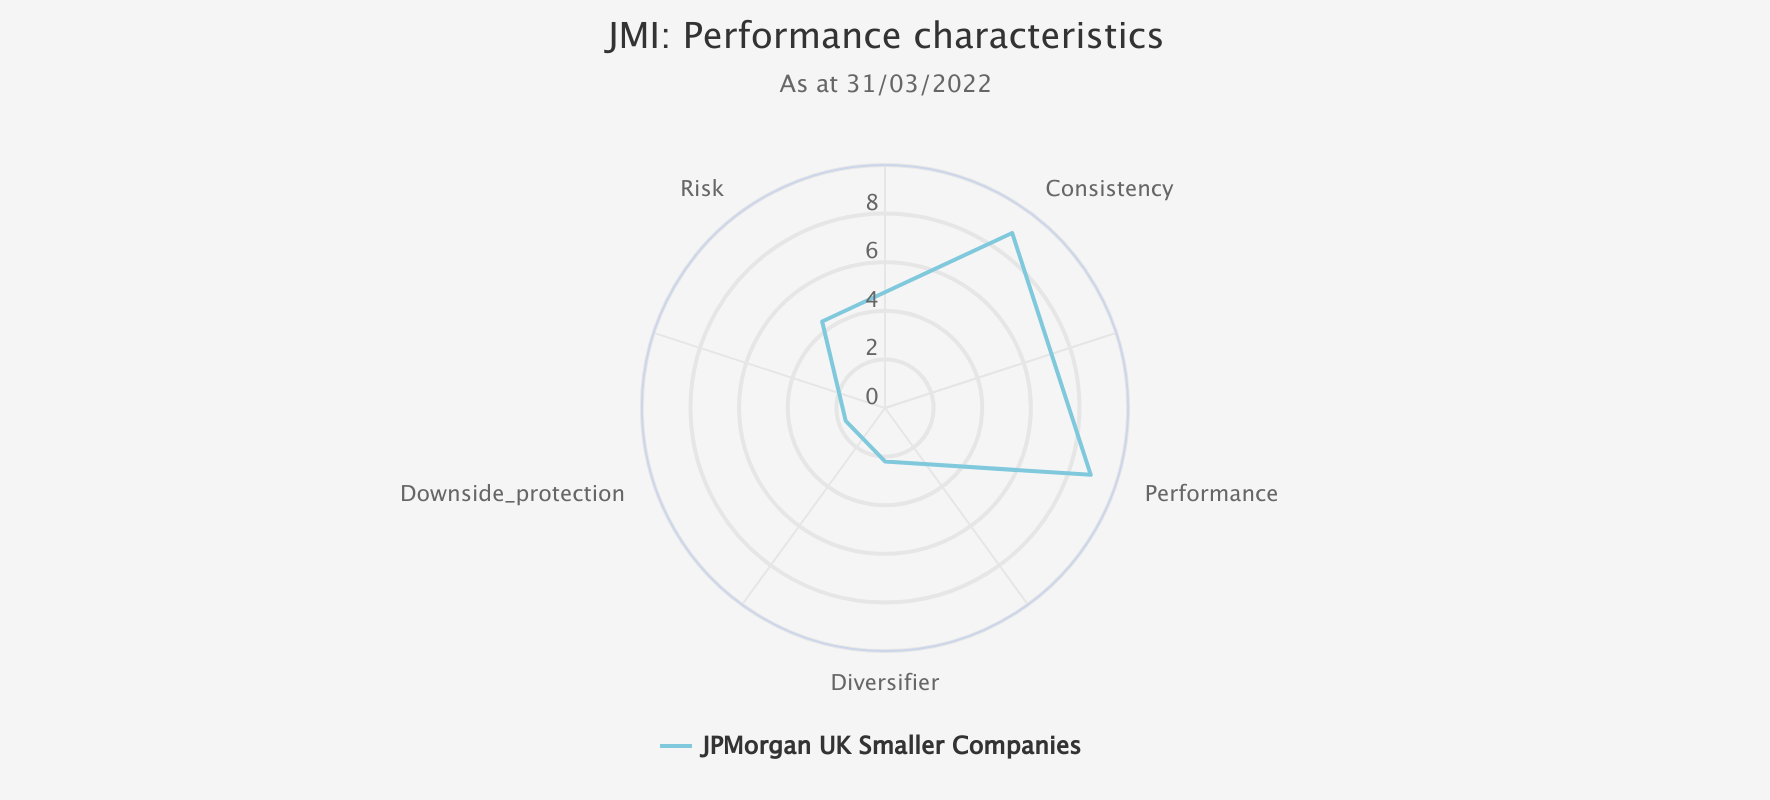 jmi-performance-characteristics Kepler chart June 2022